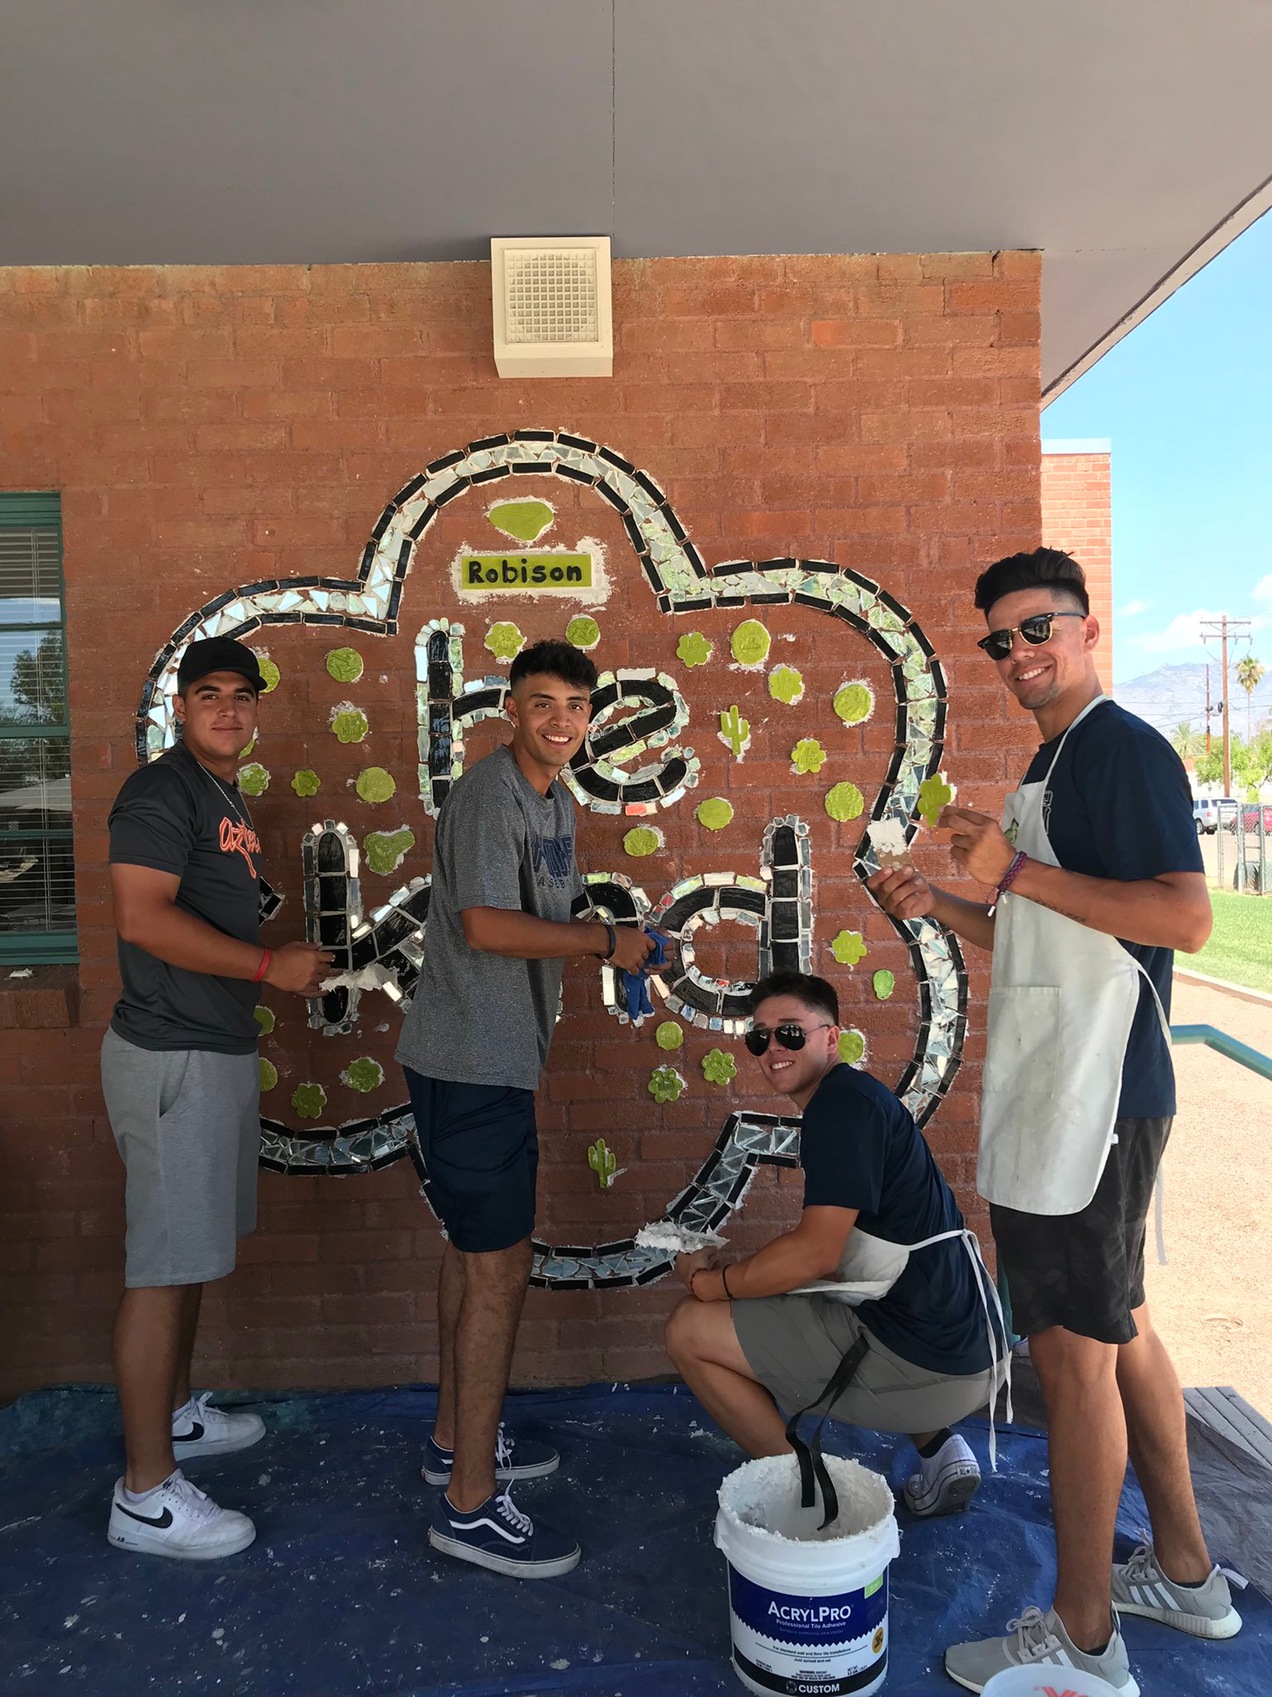 Baseball creates Be Kind mural at Robison Elementary